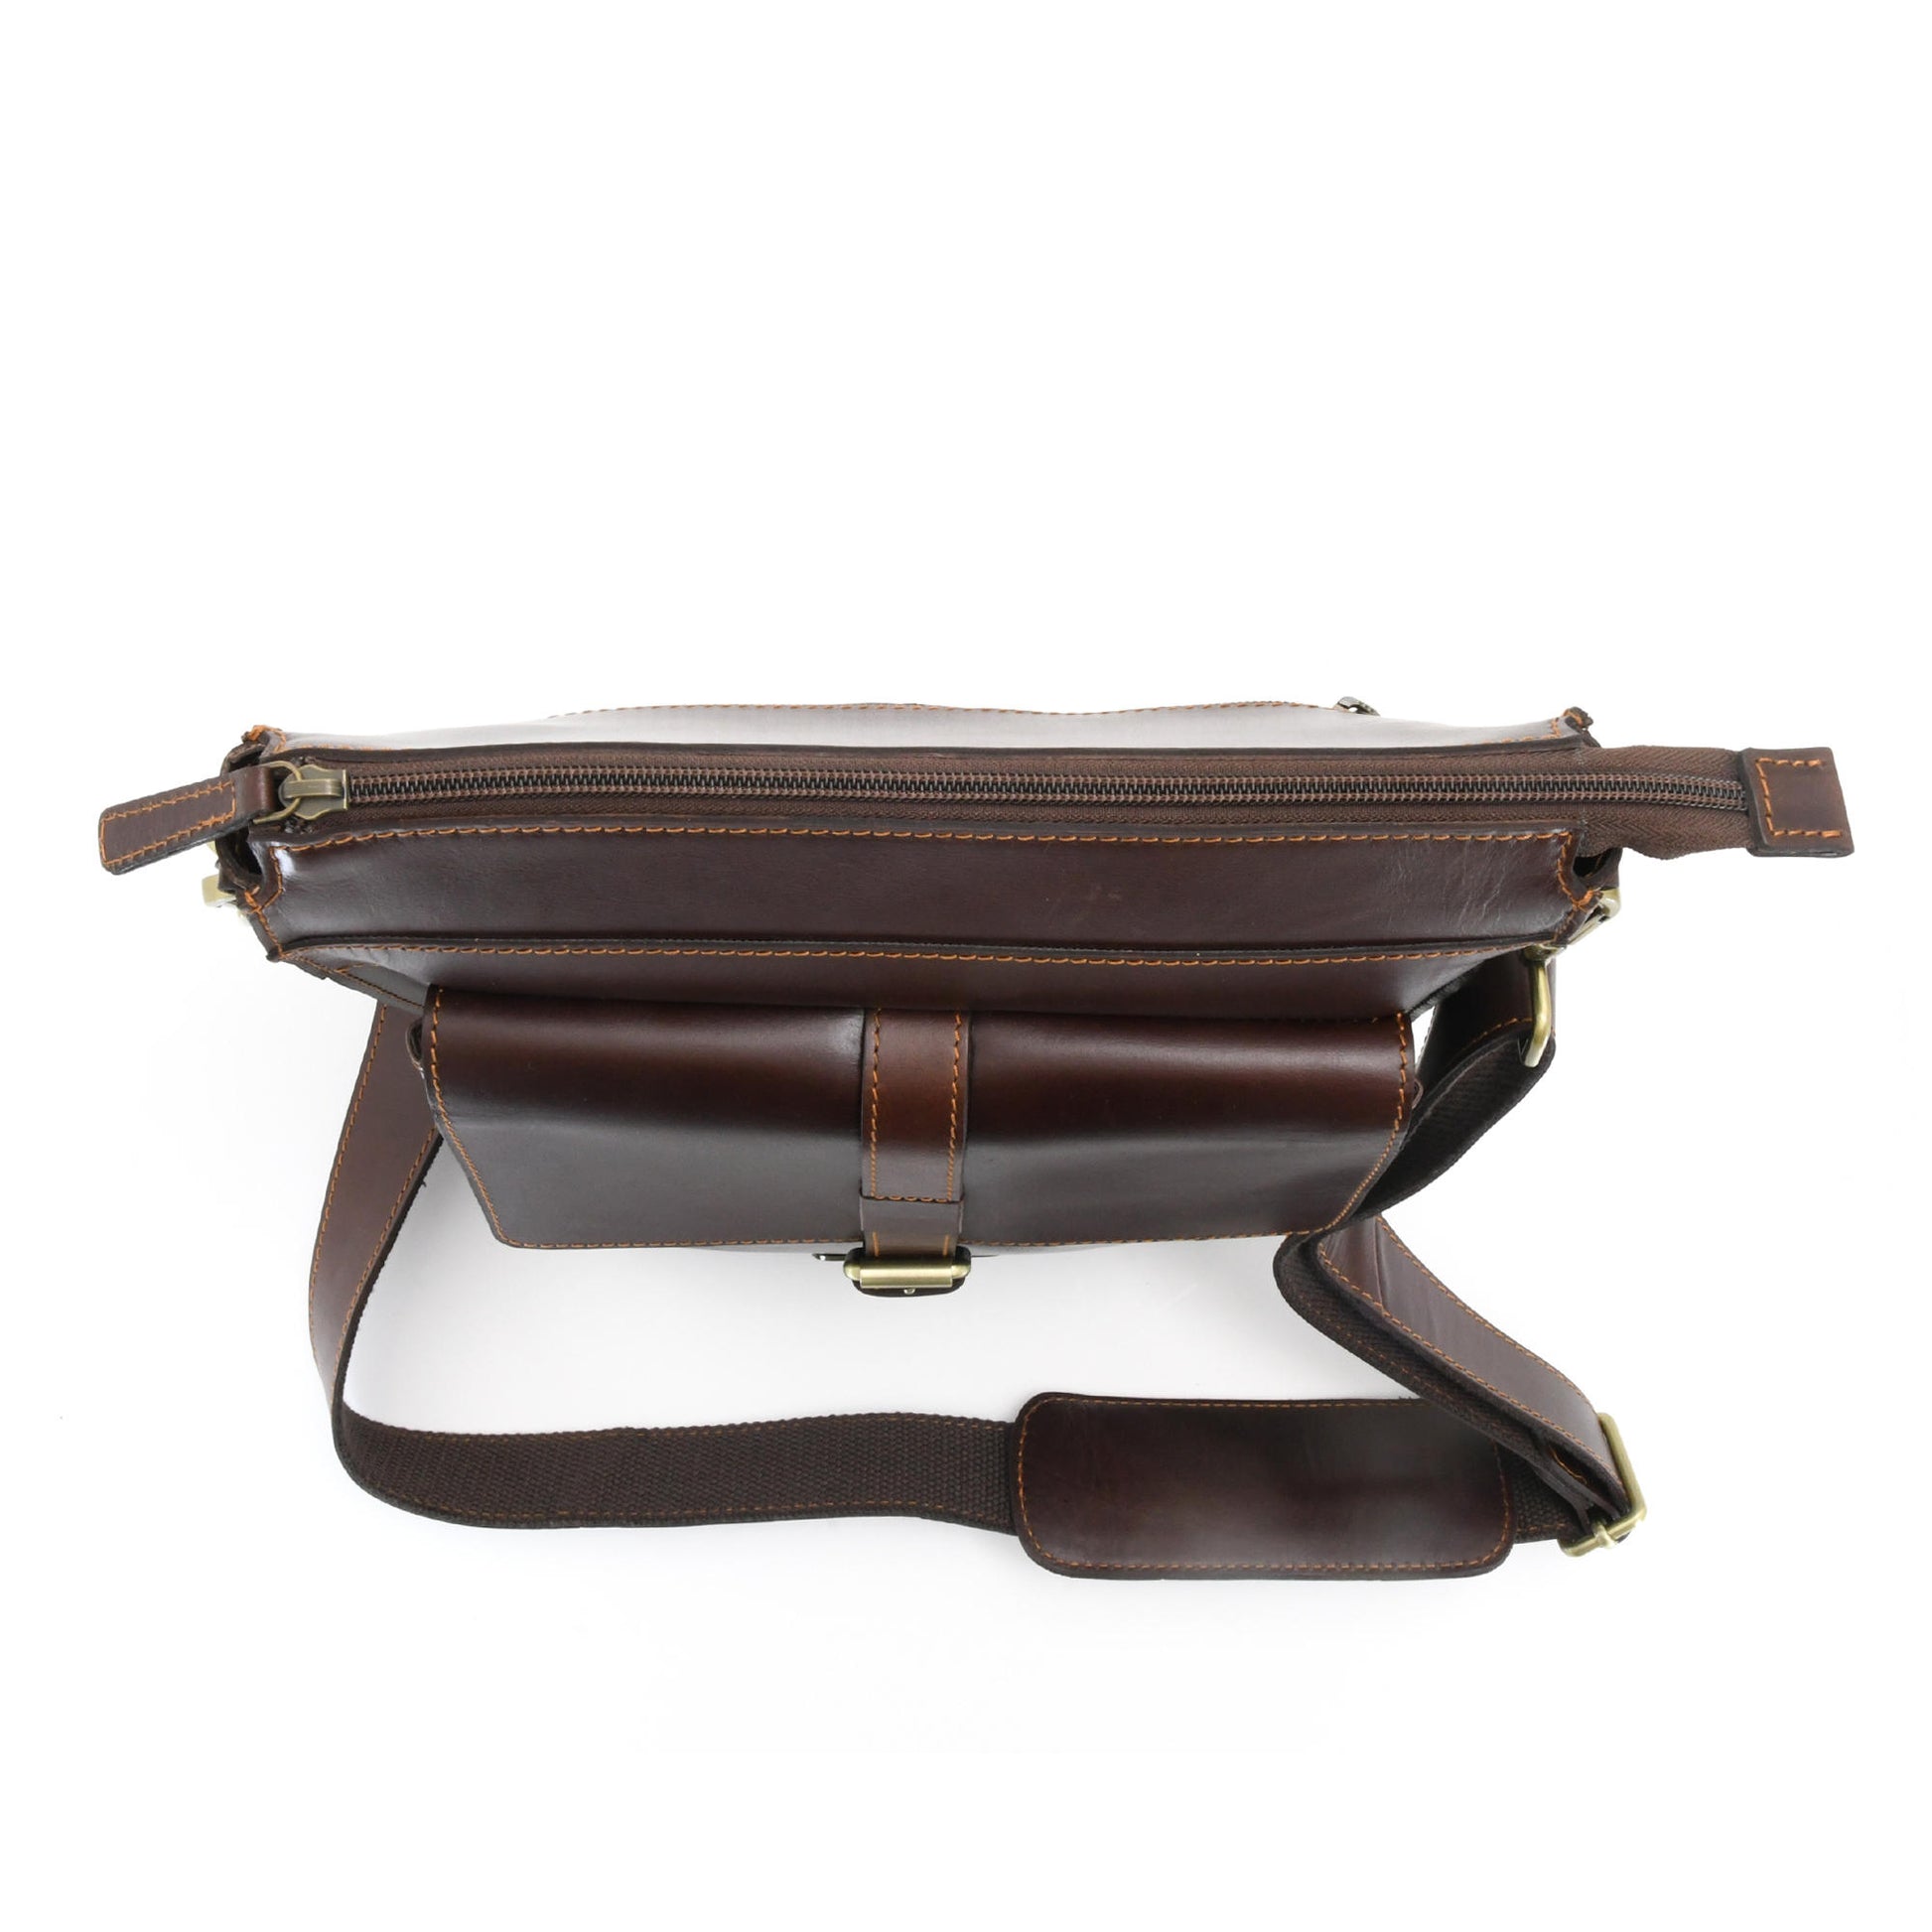 Style n Craft 392002 Tall Messenger Bag in Full Grain Dark Brown Leather - Top View Showing Main Bag Zipper Closure